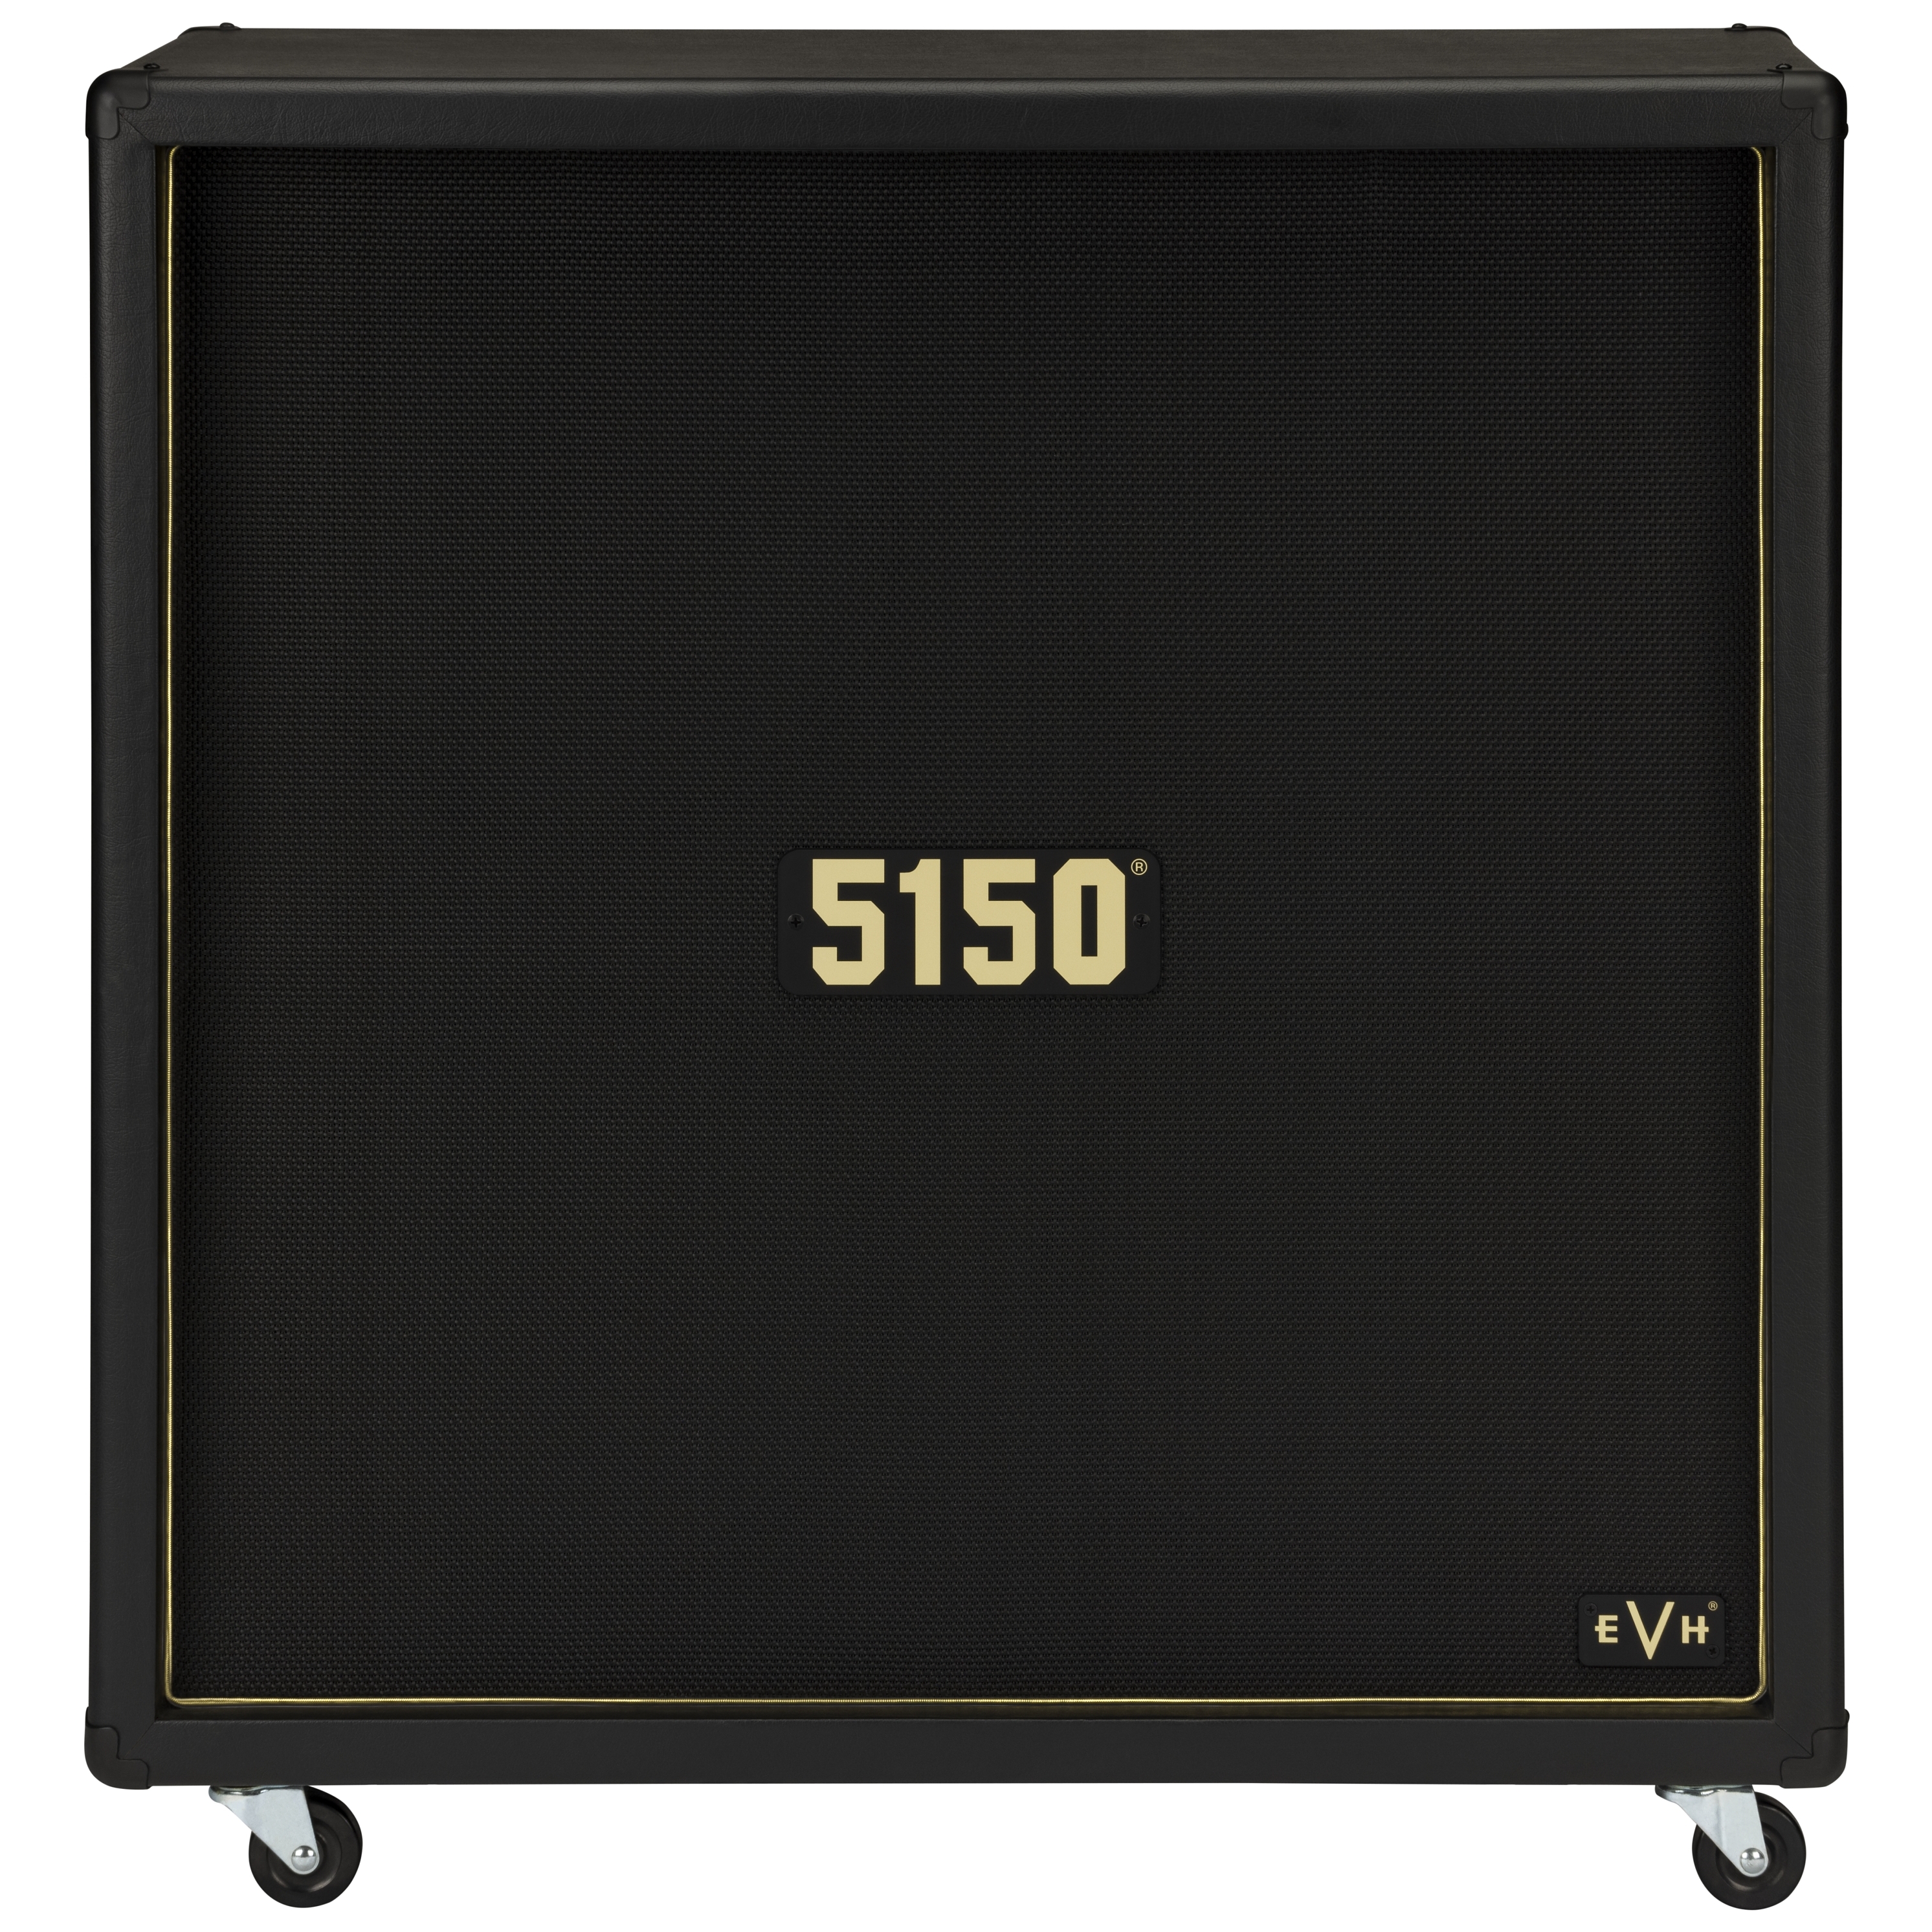 EVH 5150 Iconic Series EL34 4x12 Cabinet 2